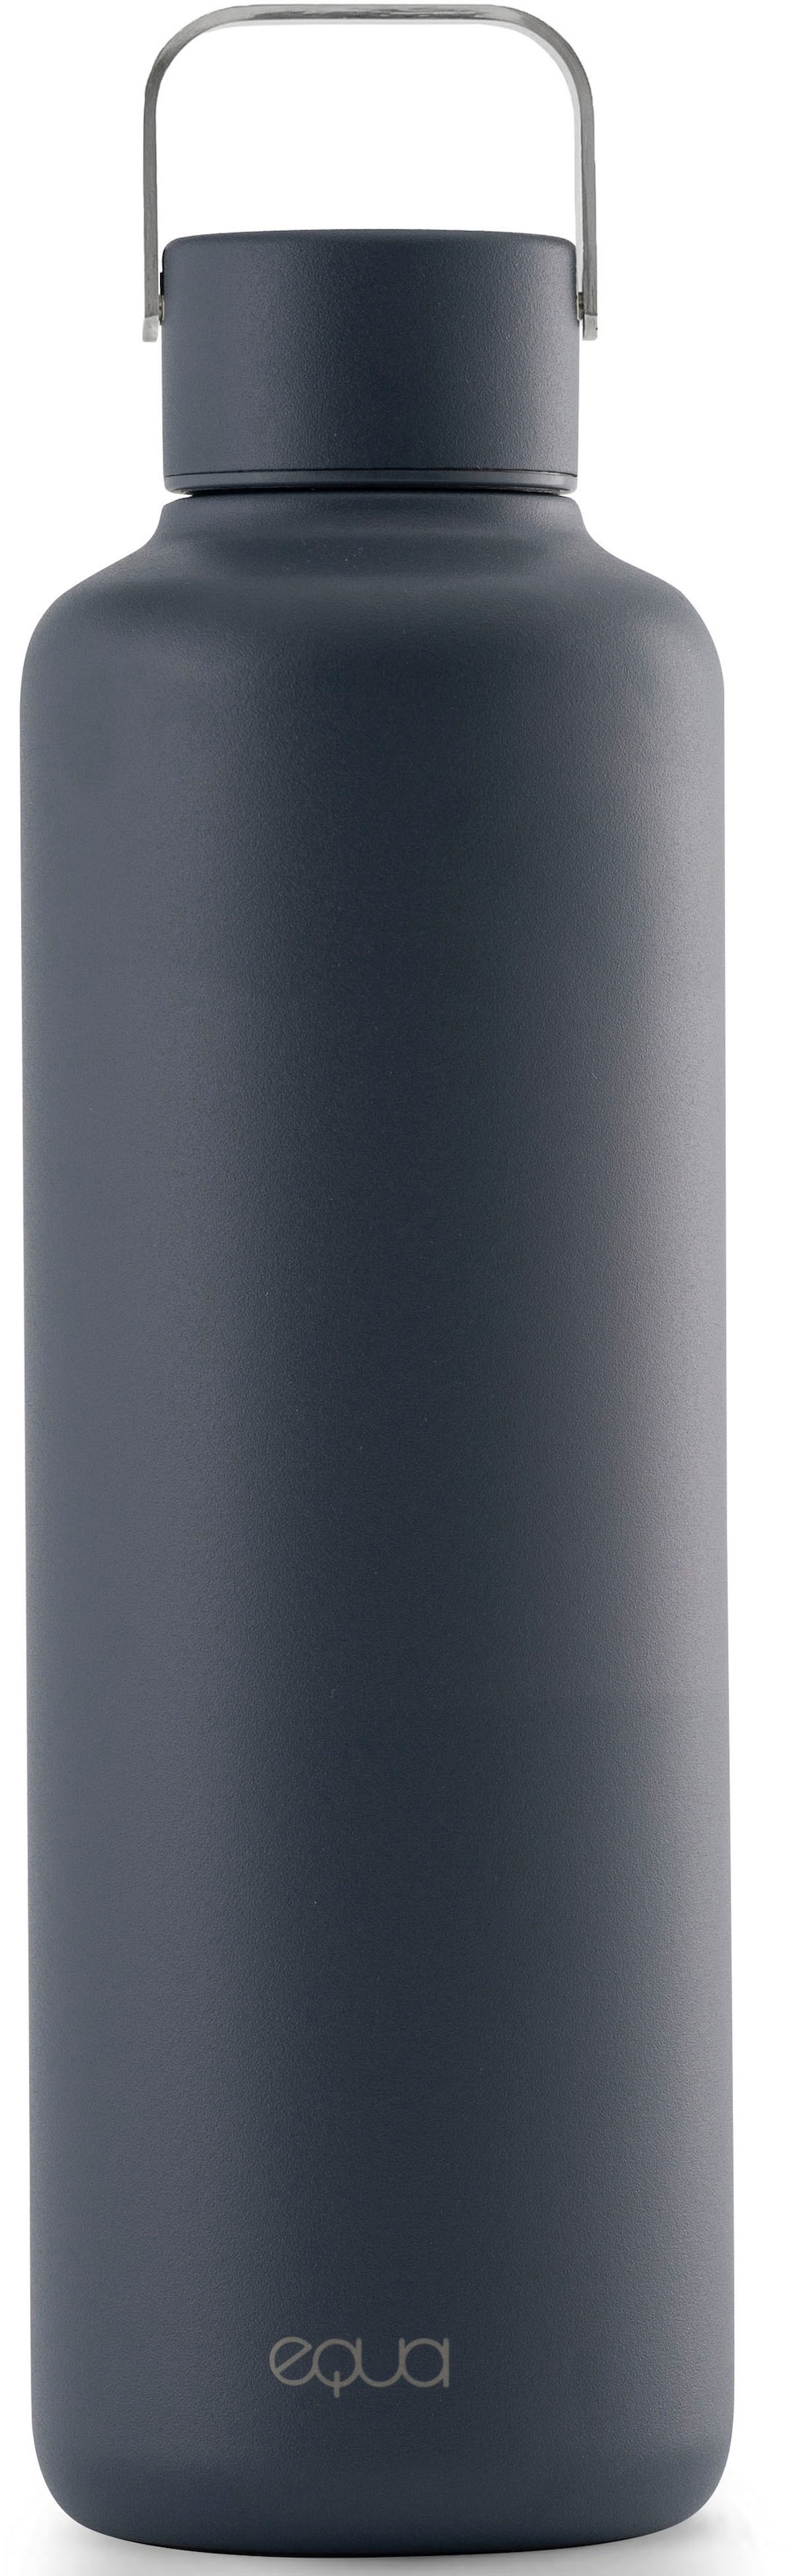 Trinkflasche »Timeless Navy«, Edelstahl, 1000 ml